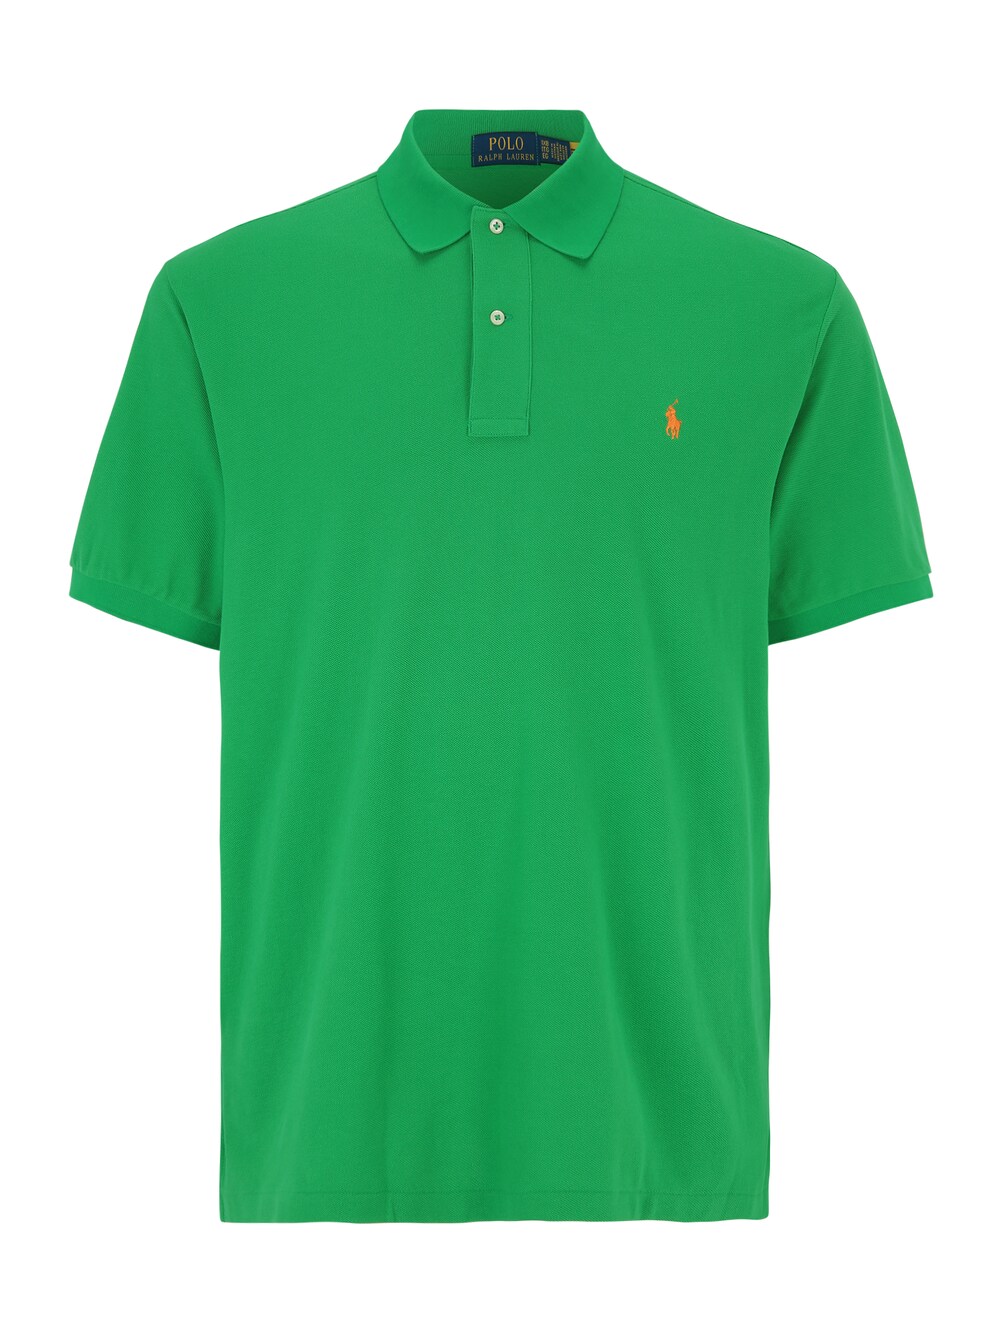 Футболка Polo Ralph Lauren Big & Tall, зеленый рубашка polo ralph lauren big